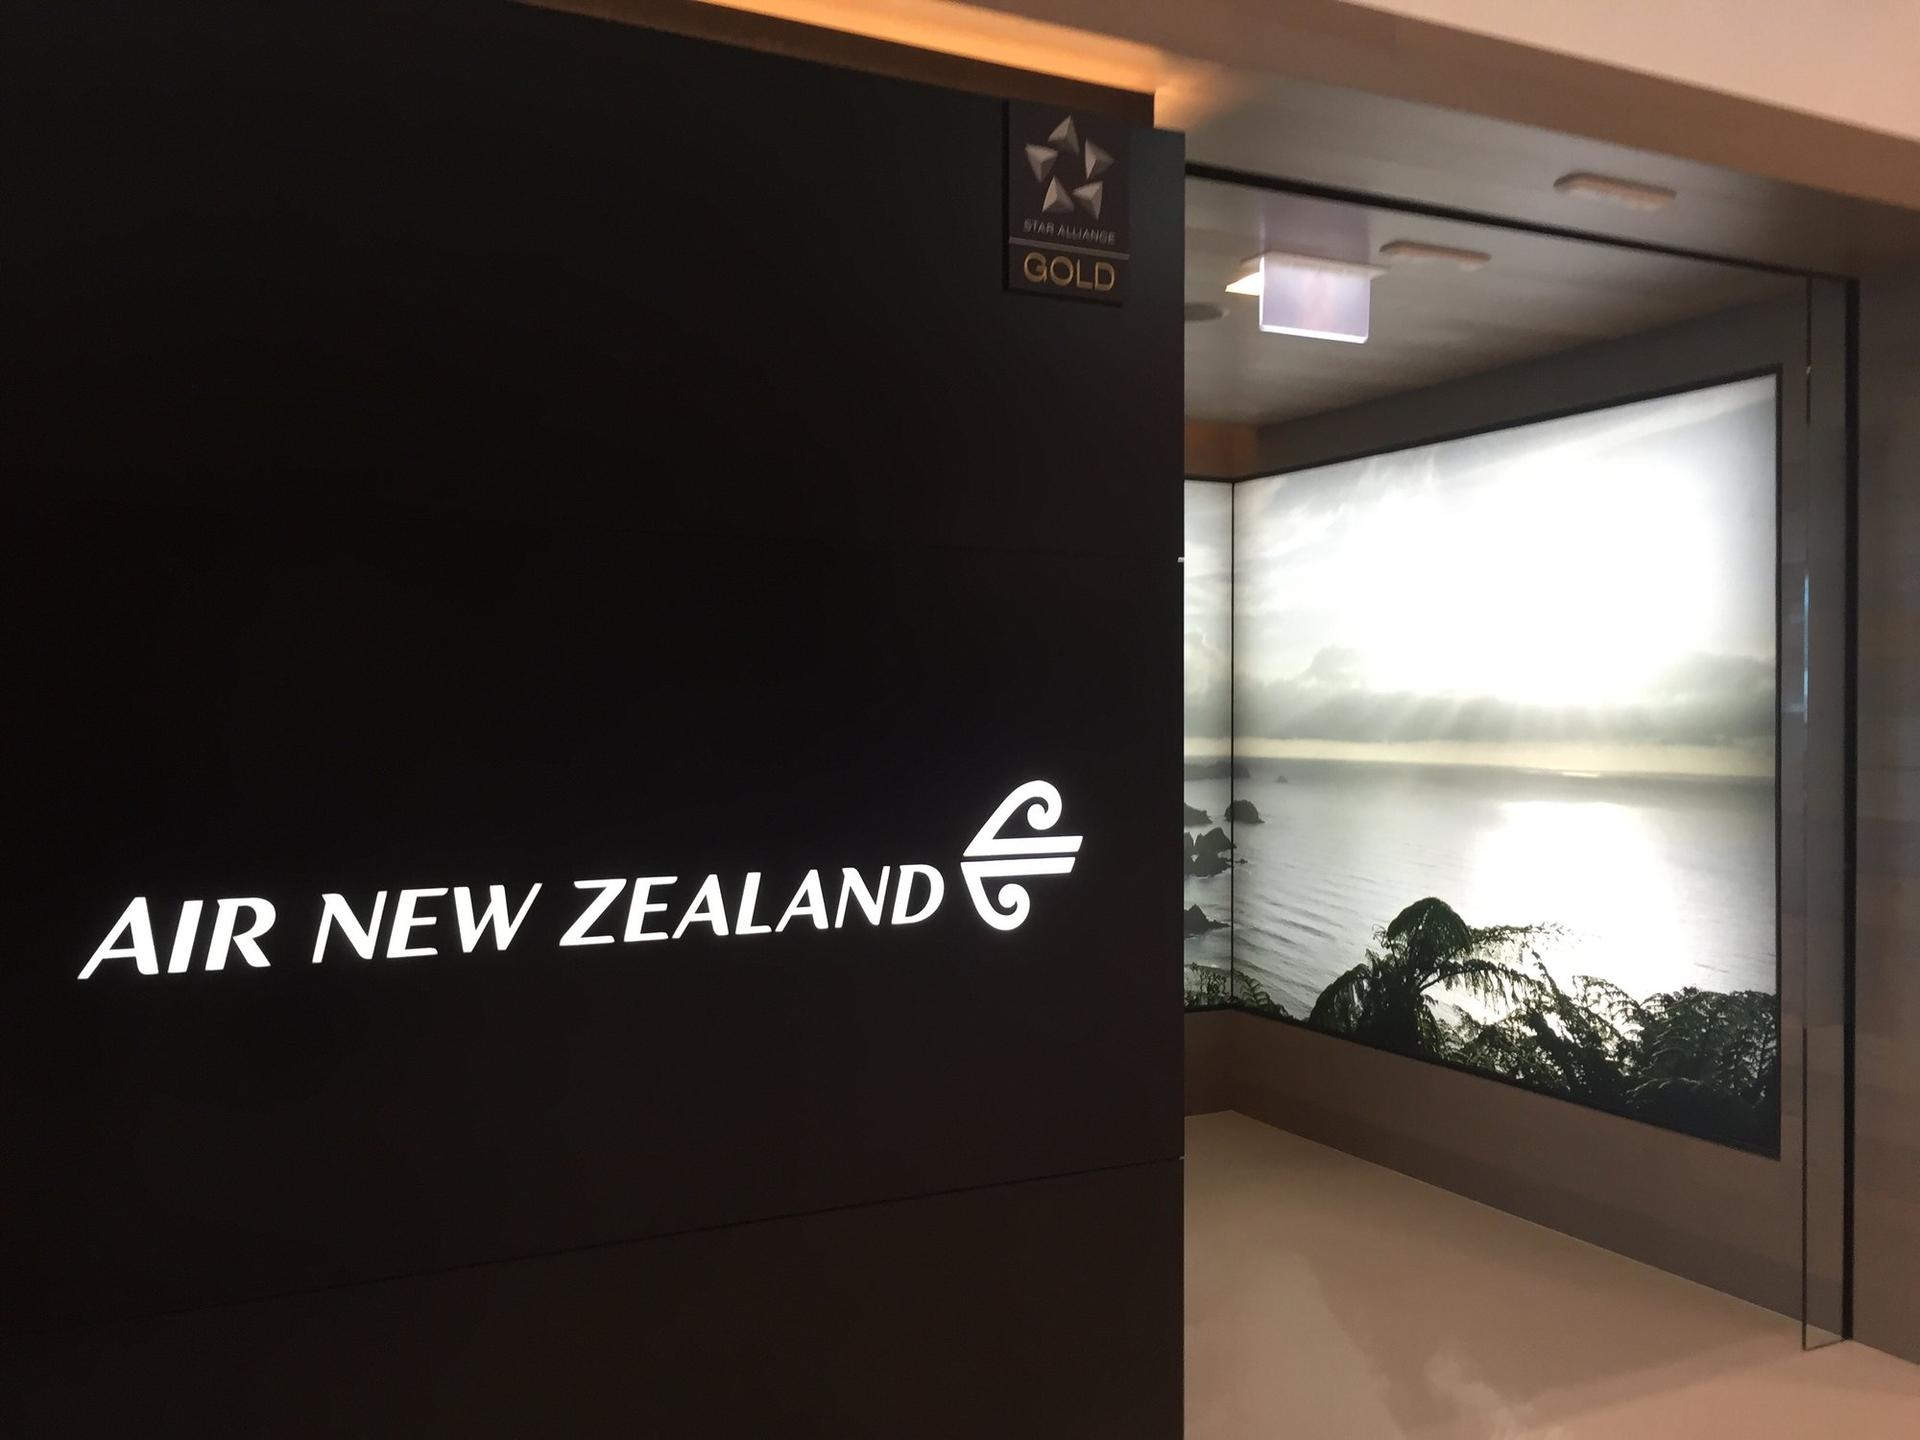 Air New Zealand International Lounge image 1 of 5